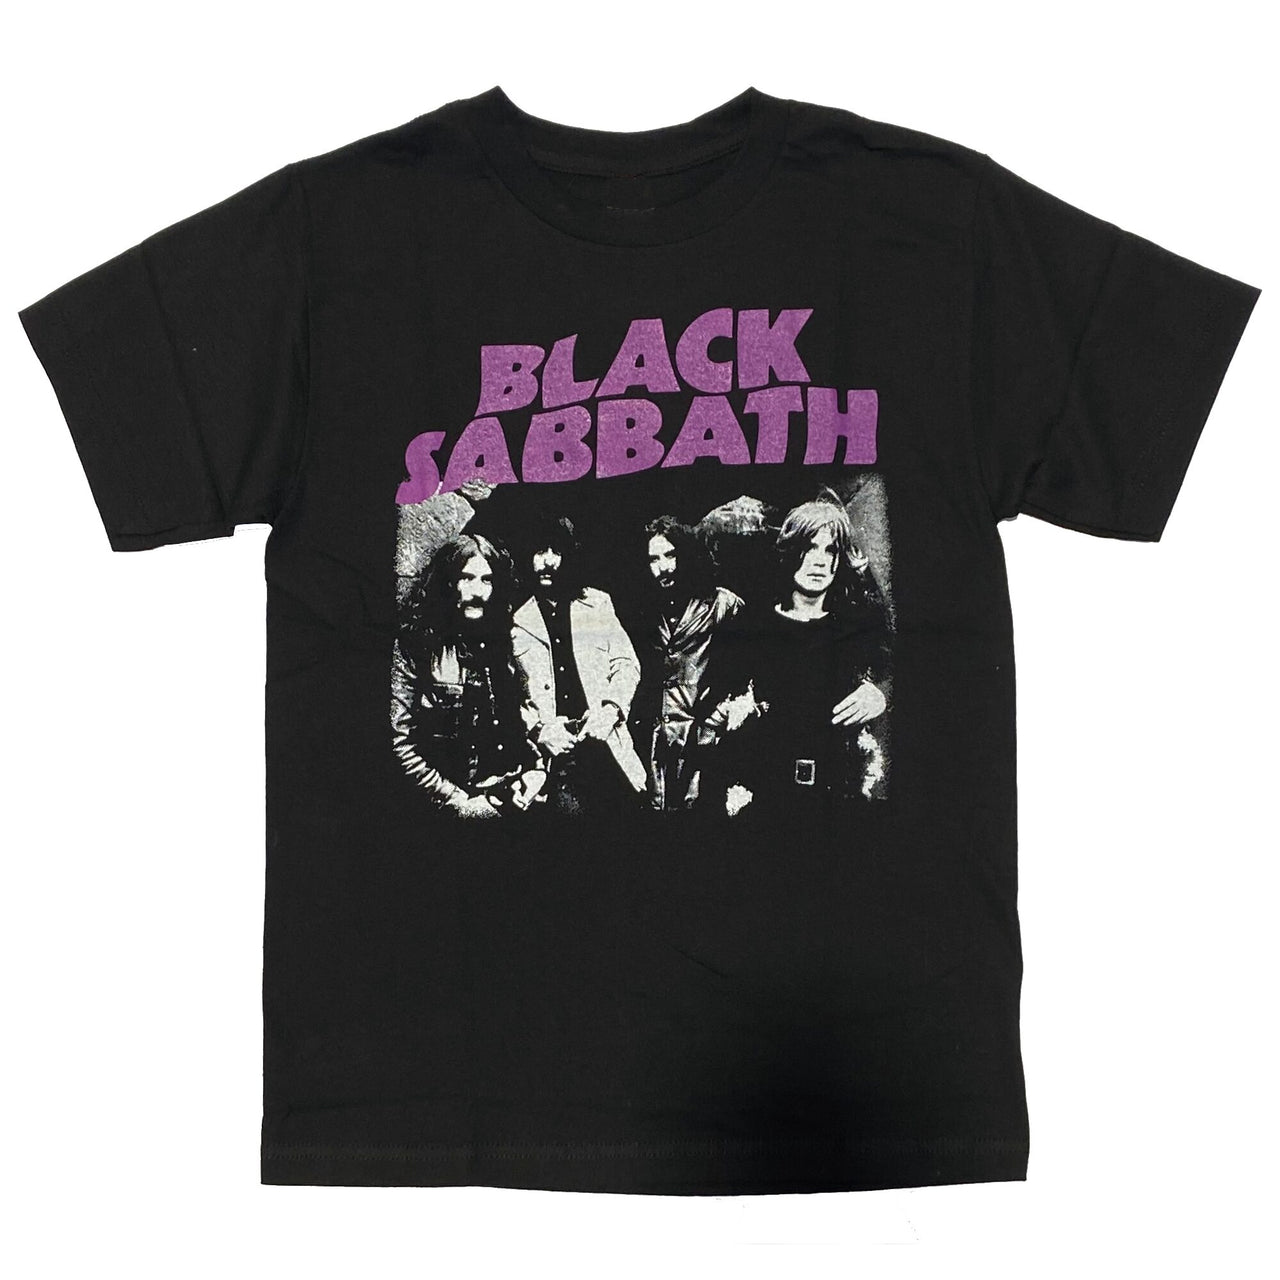 Black Sabbath Group Photo T-Shirt